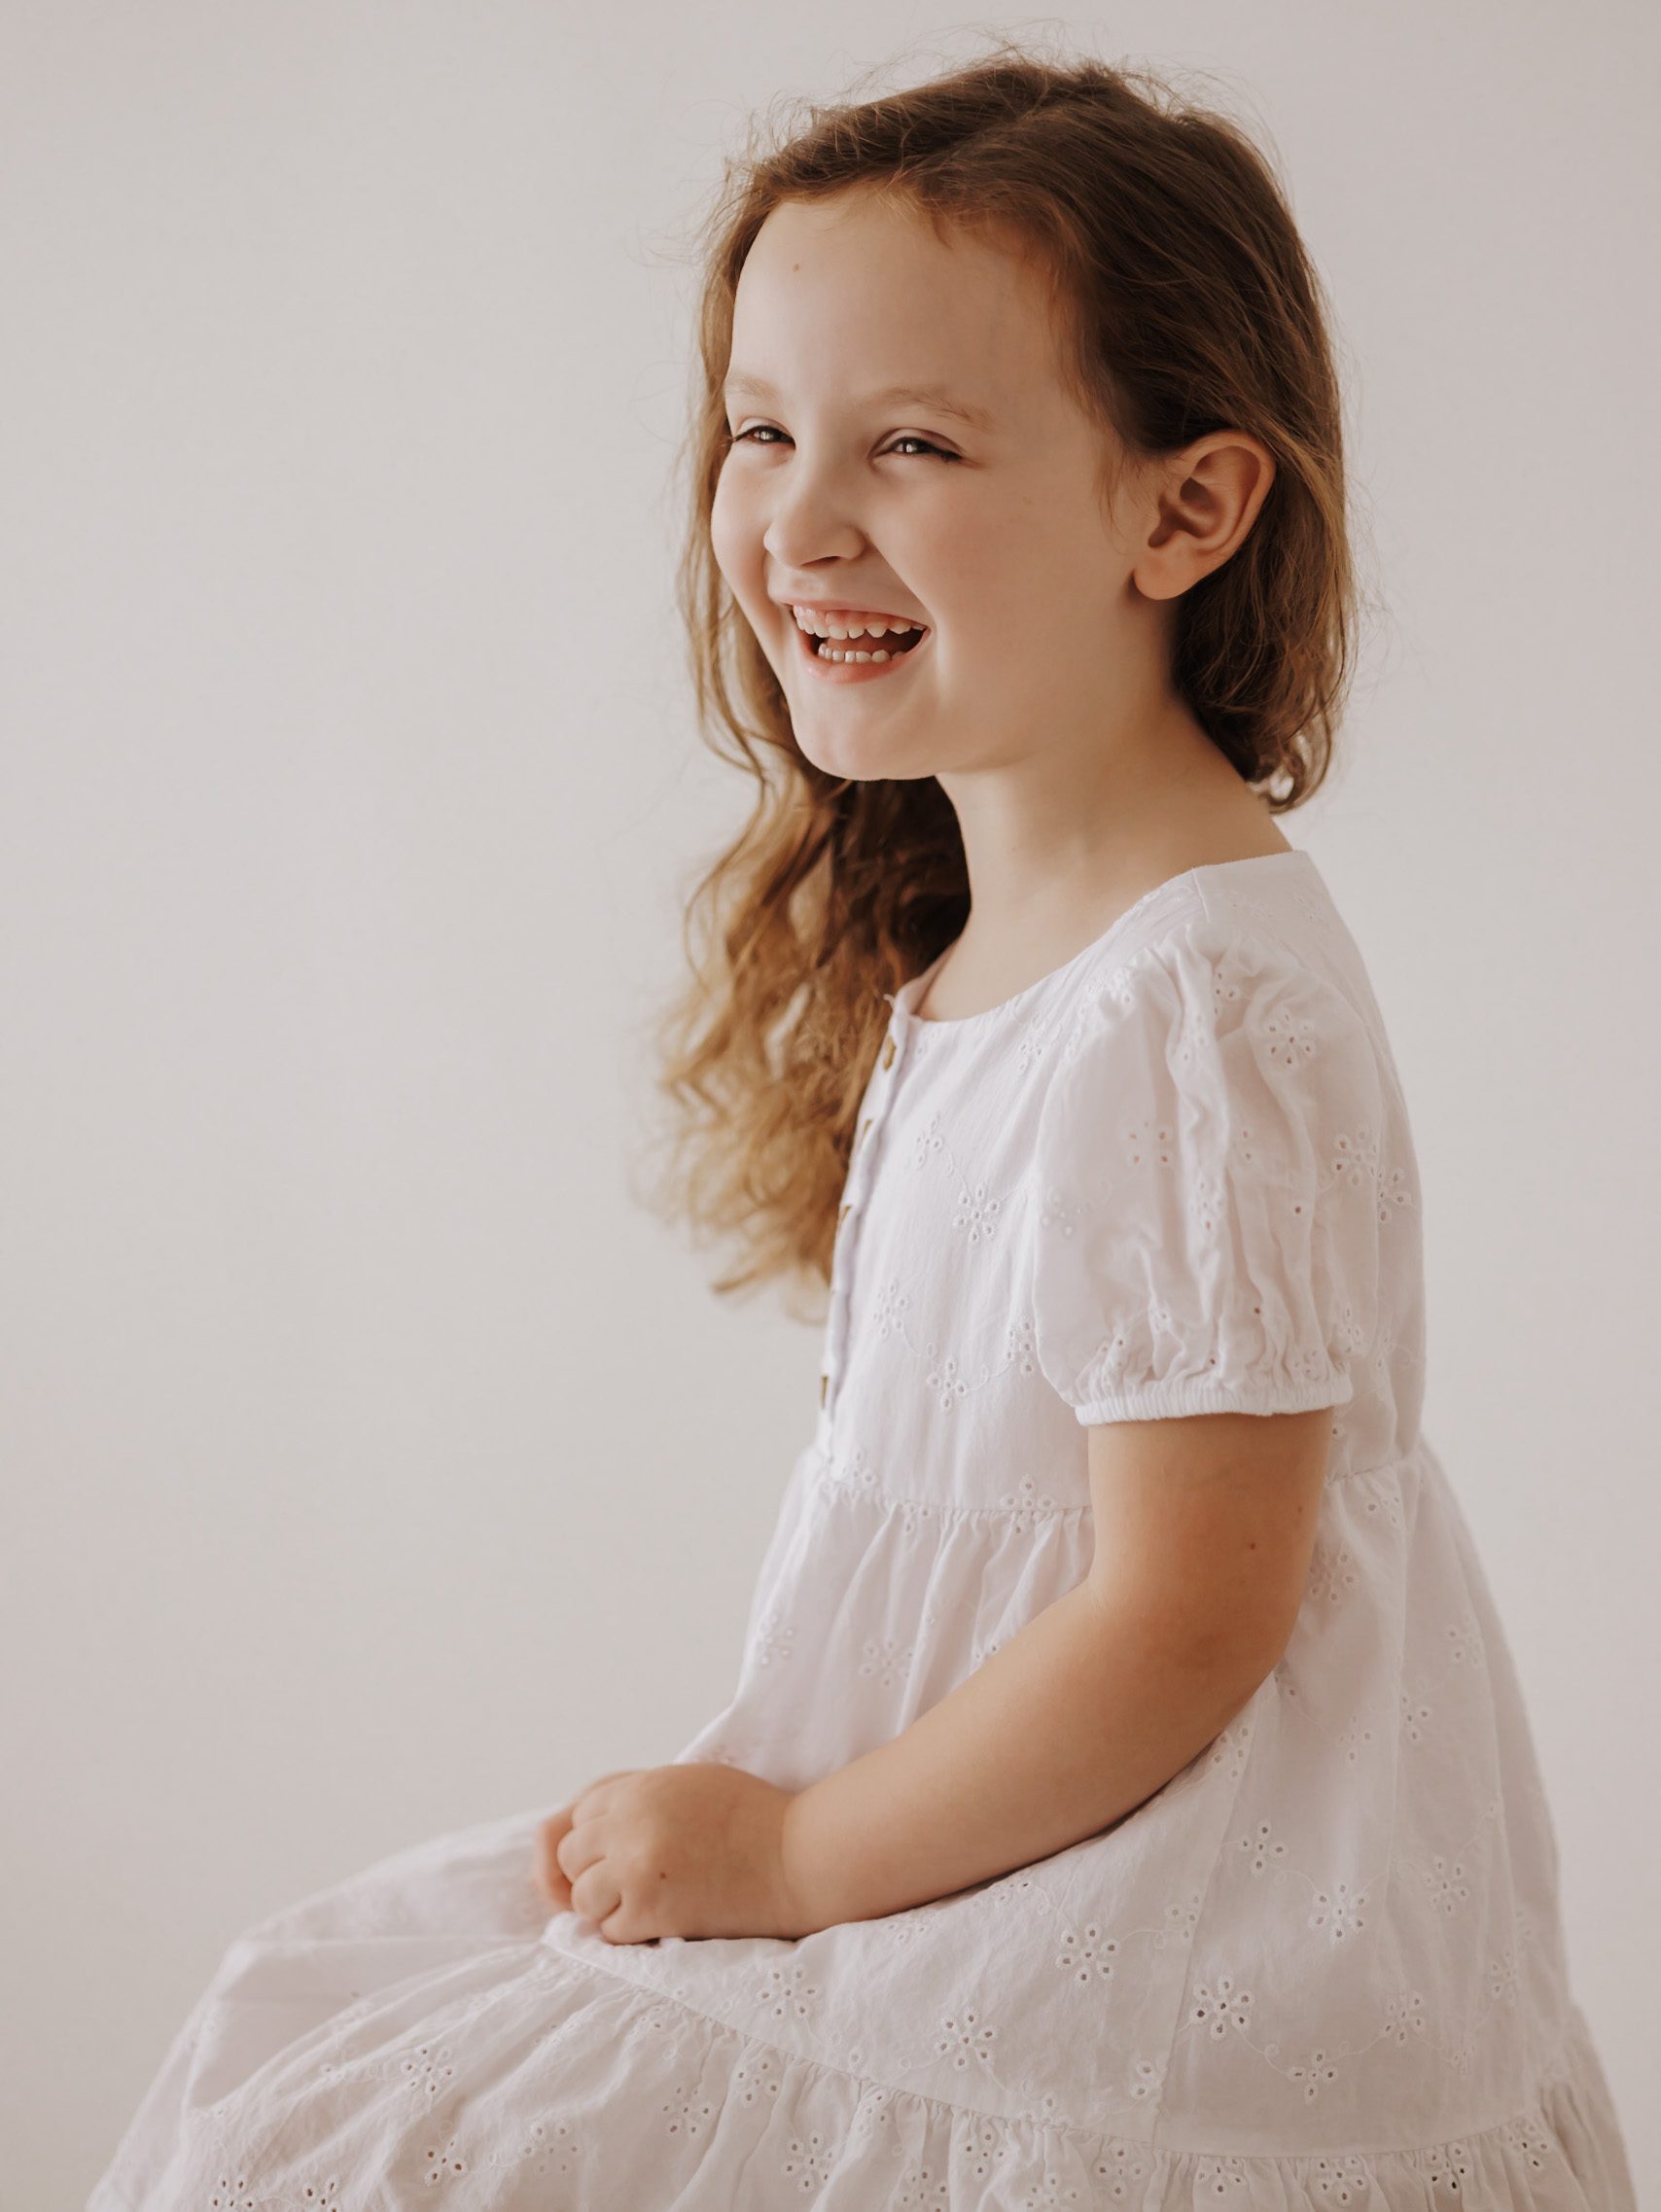 Little girl smiling during a studio back to school mini session in murfreesboro tn